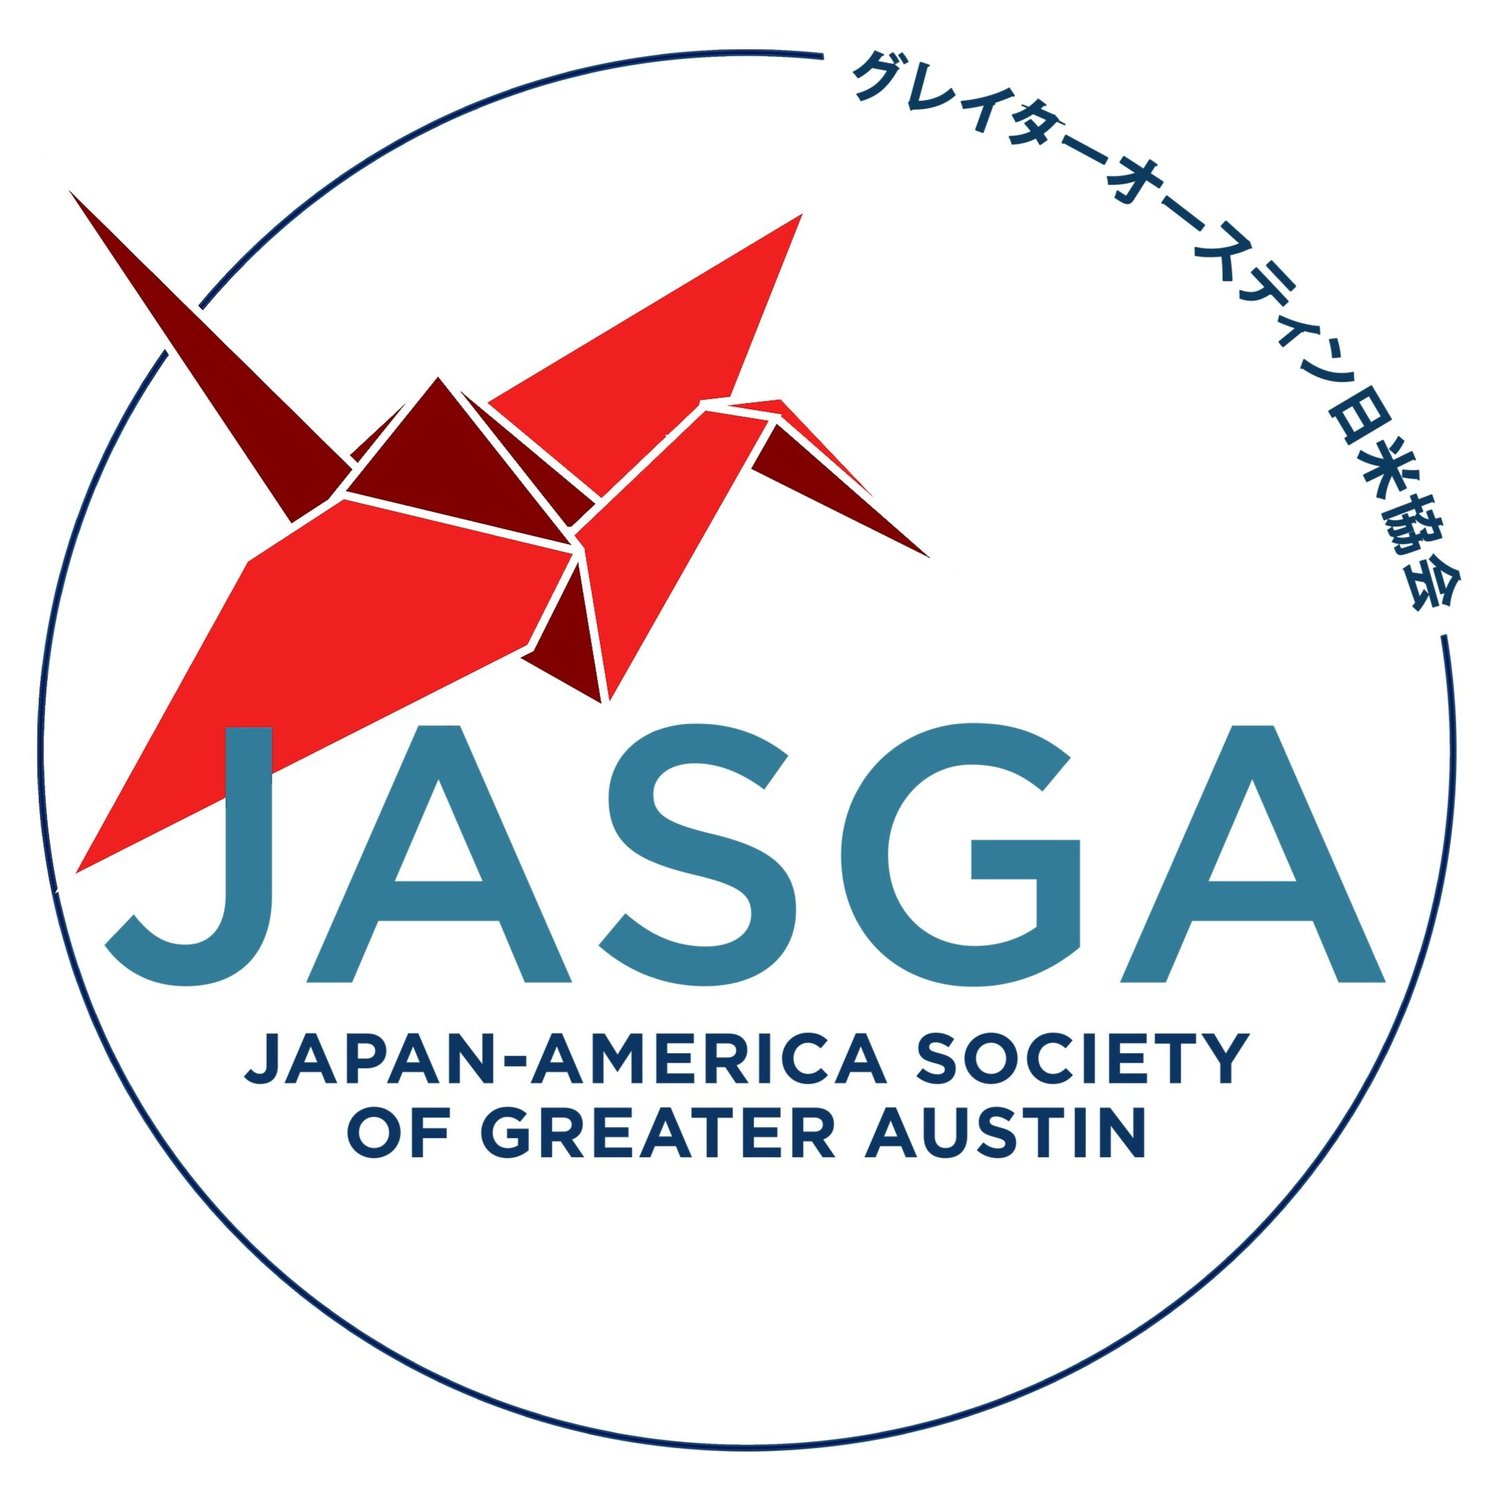 Japan-America Society of Greater Austin